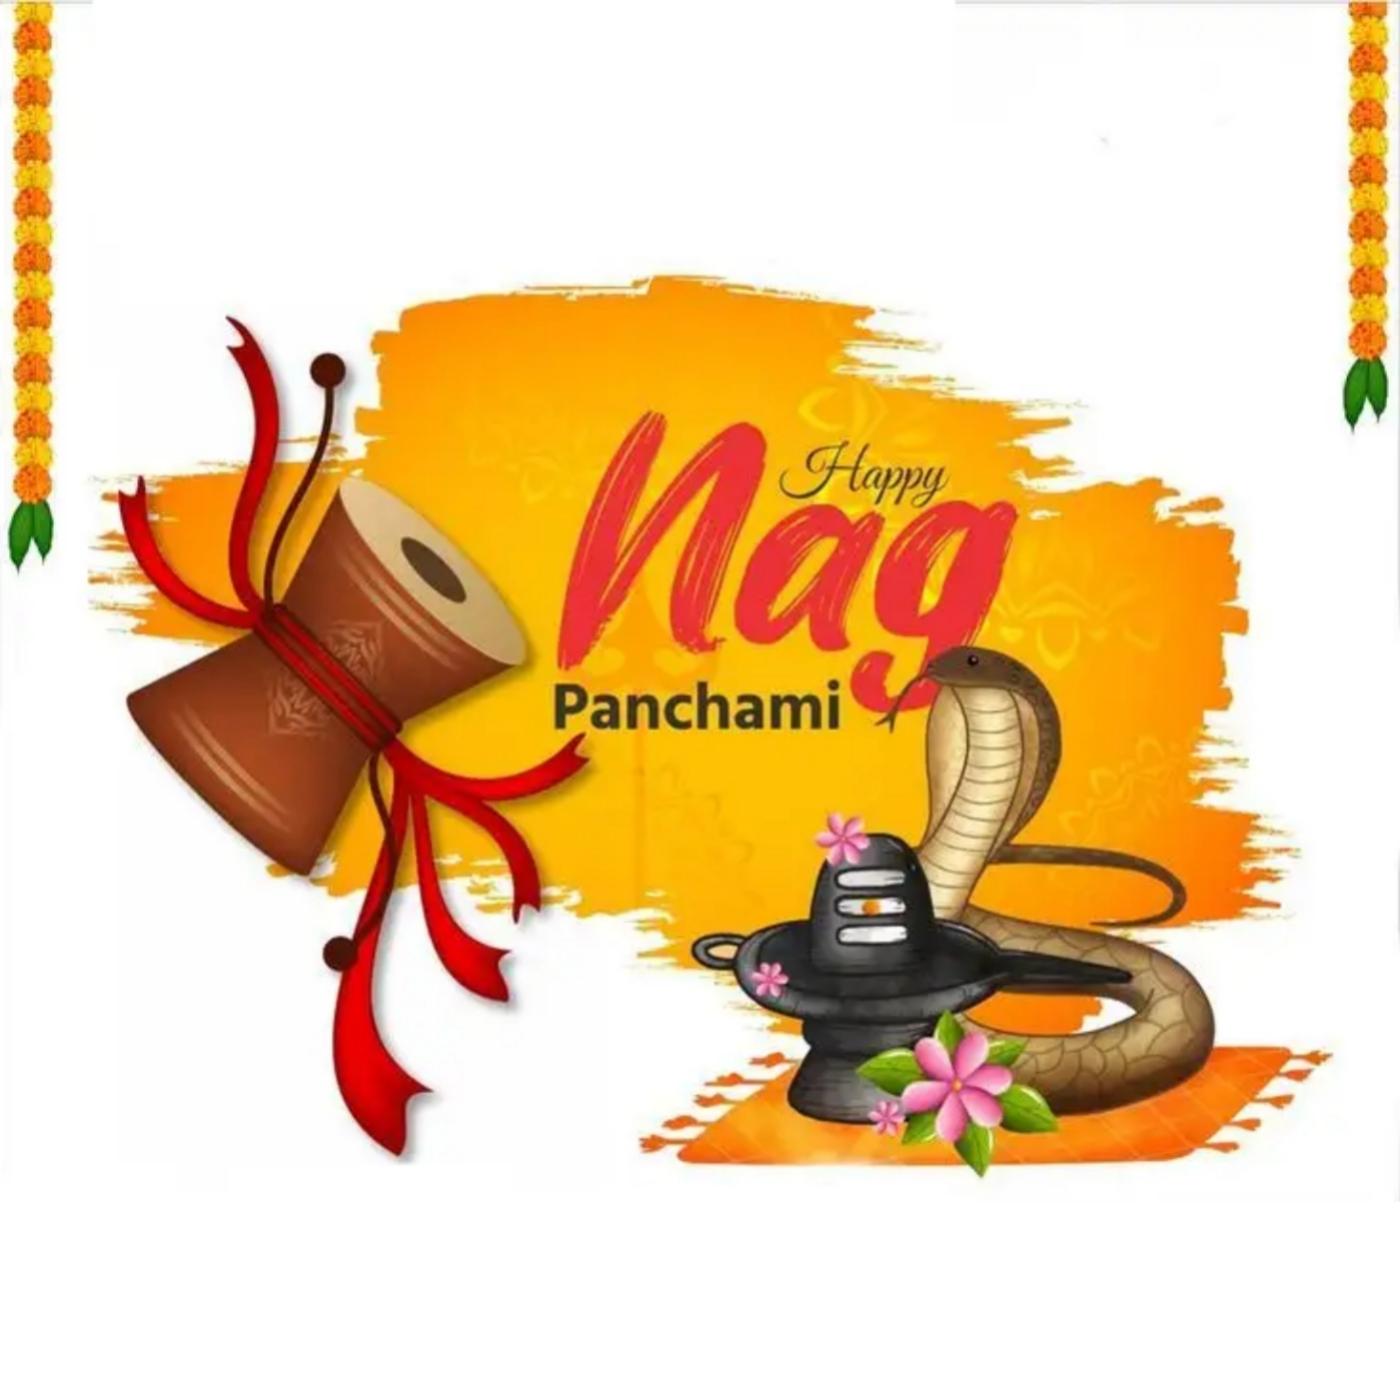 Happy Nag Panchami 2022 Wishes Images